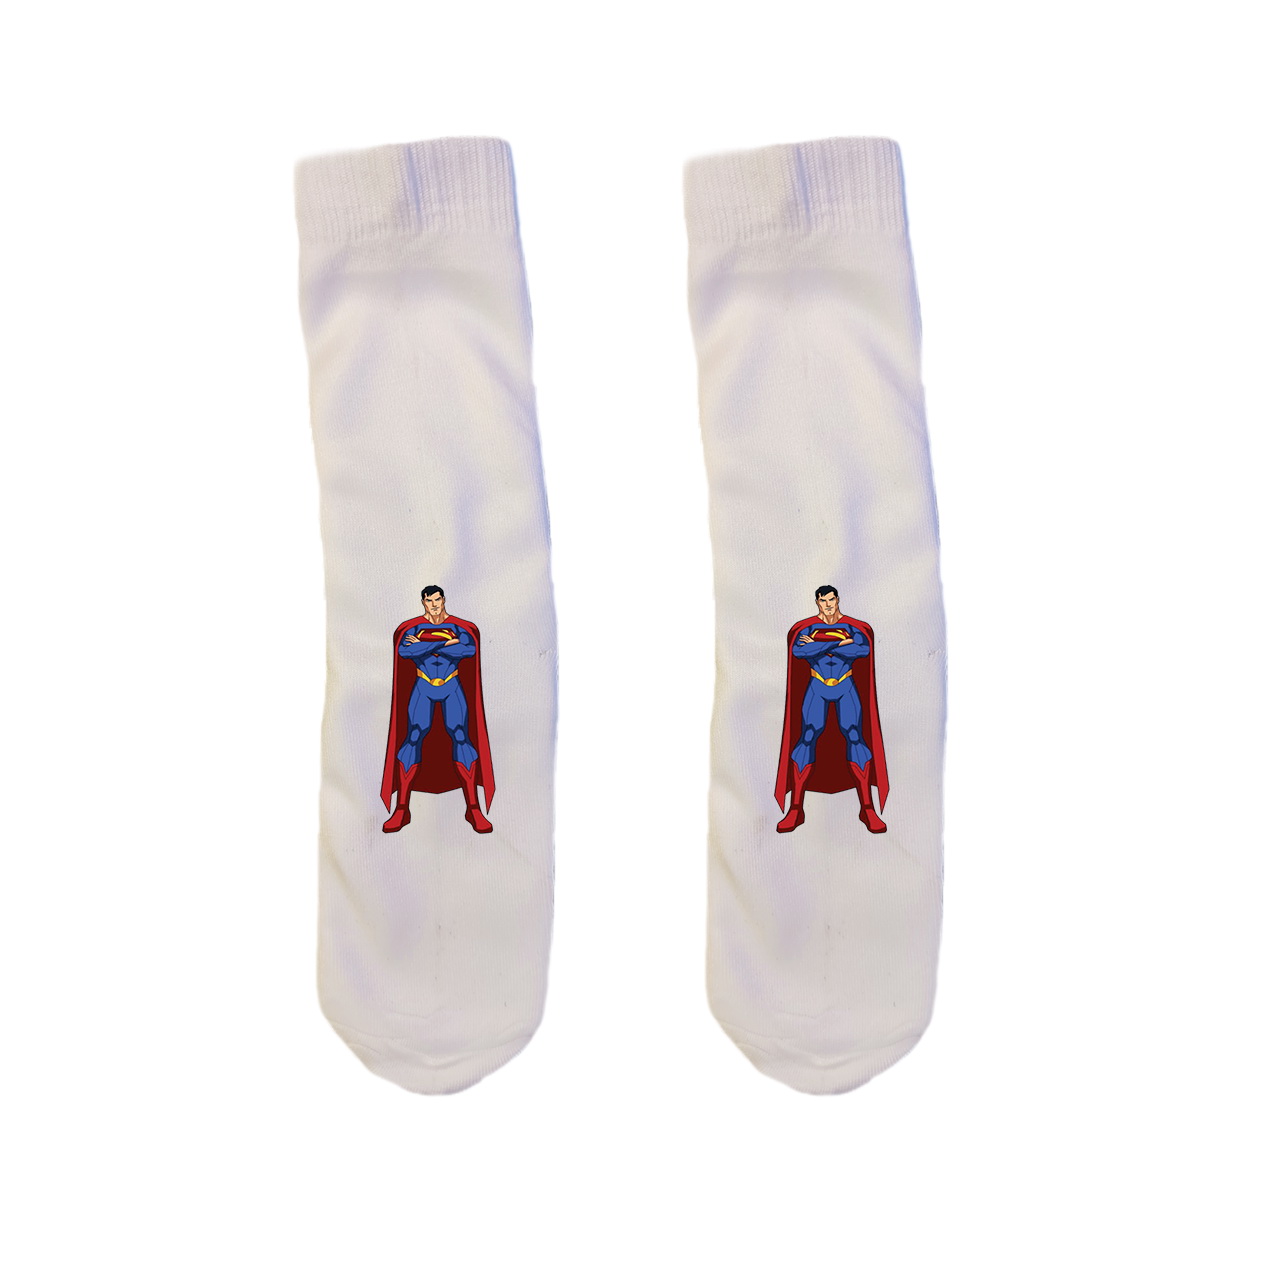 جوراب مردانه مدل سوپرمن کد 3006